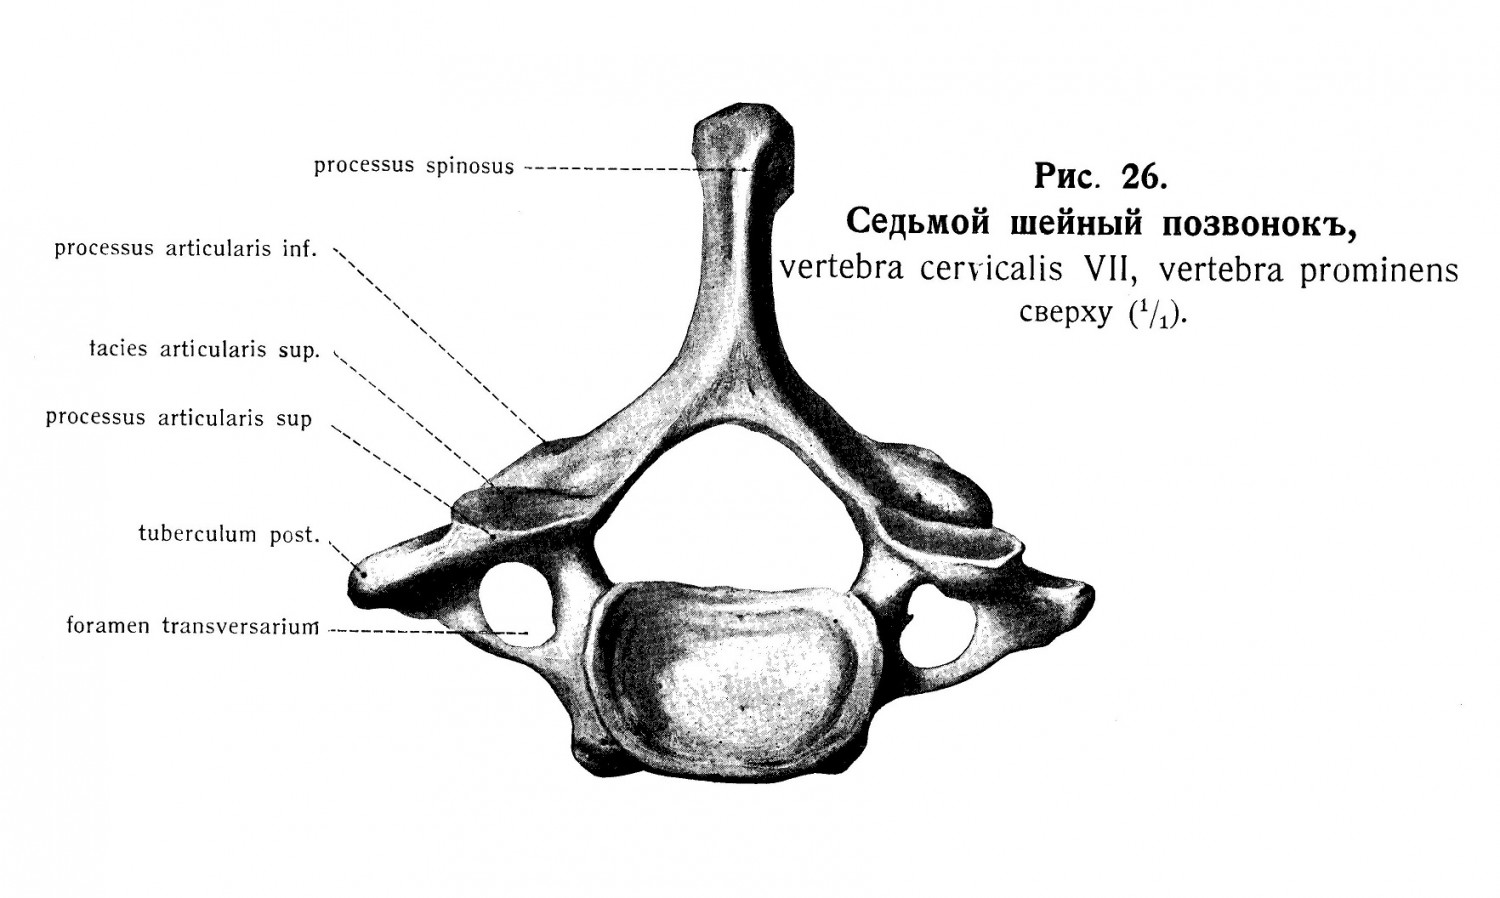 Шейные позвонки, vertebrae cervicales